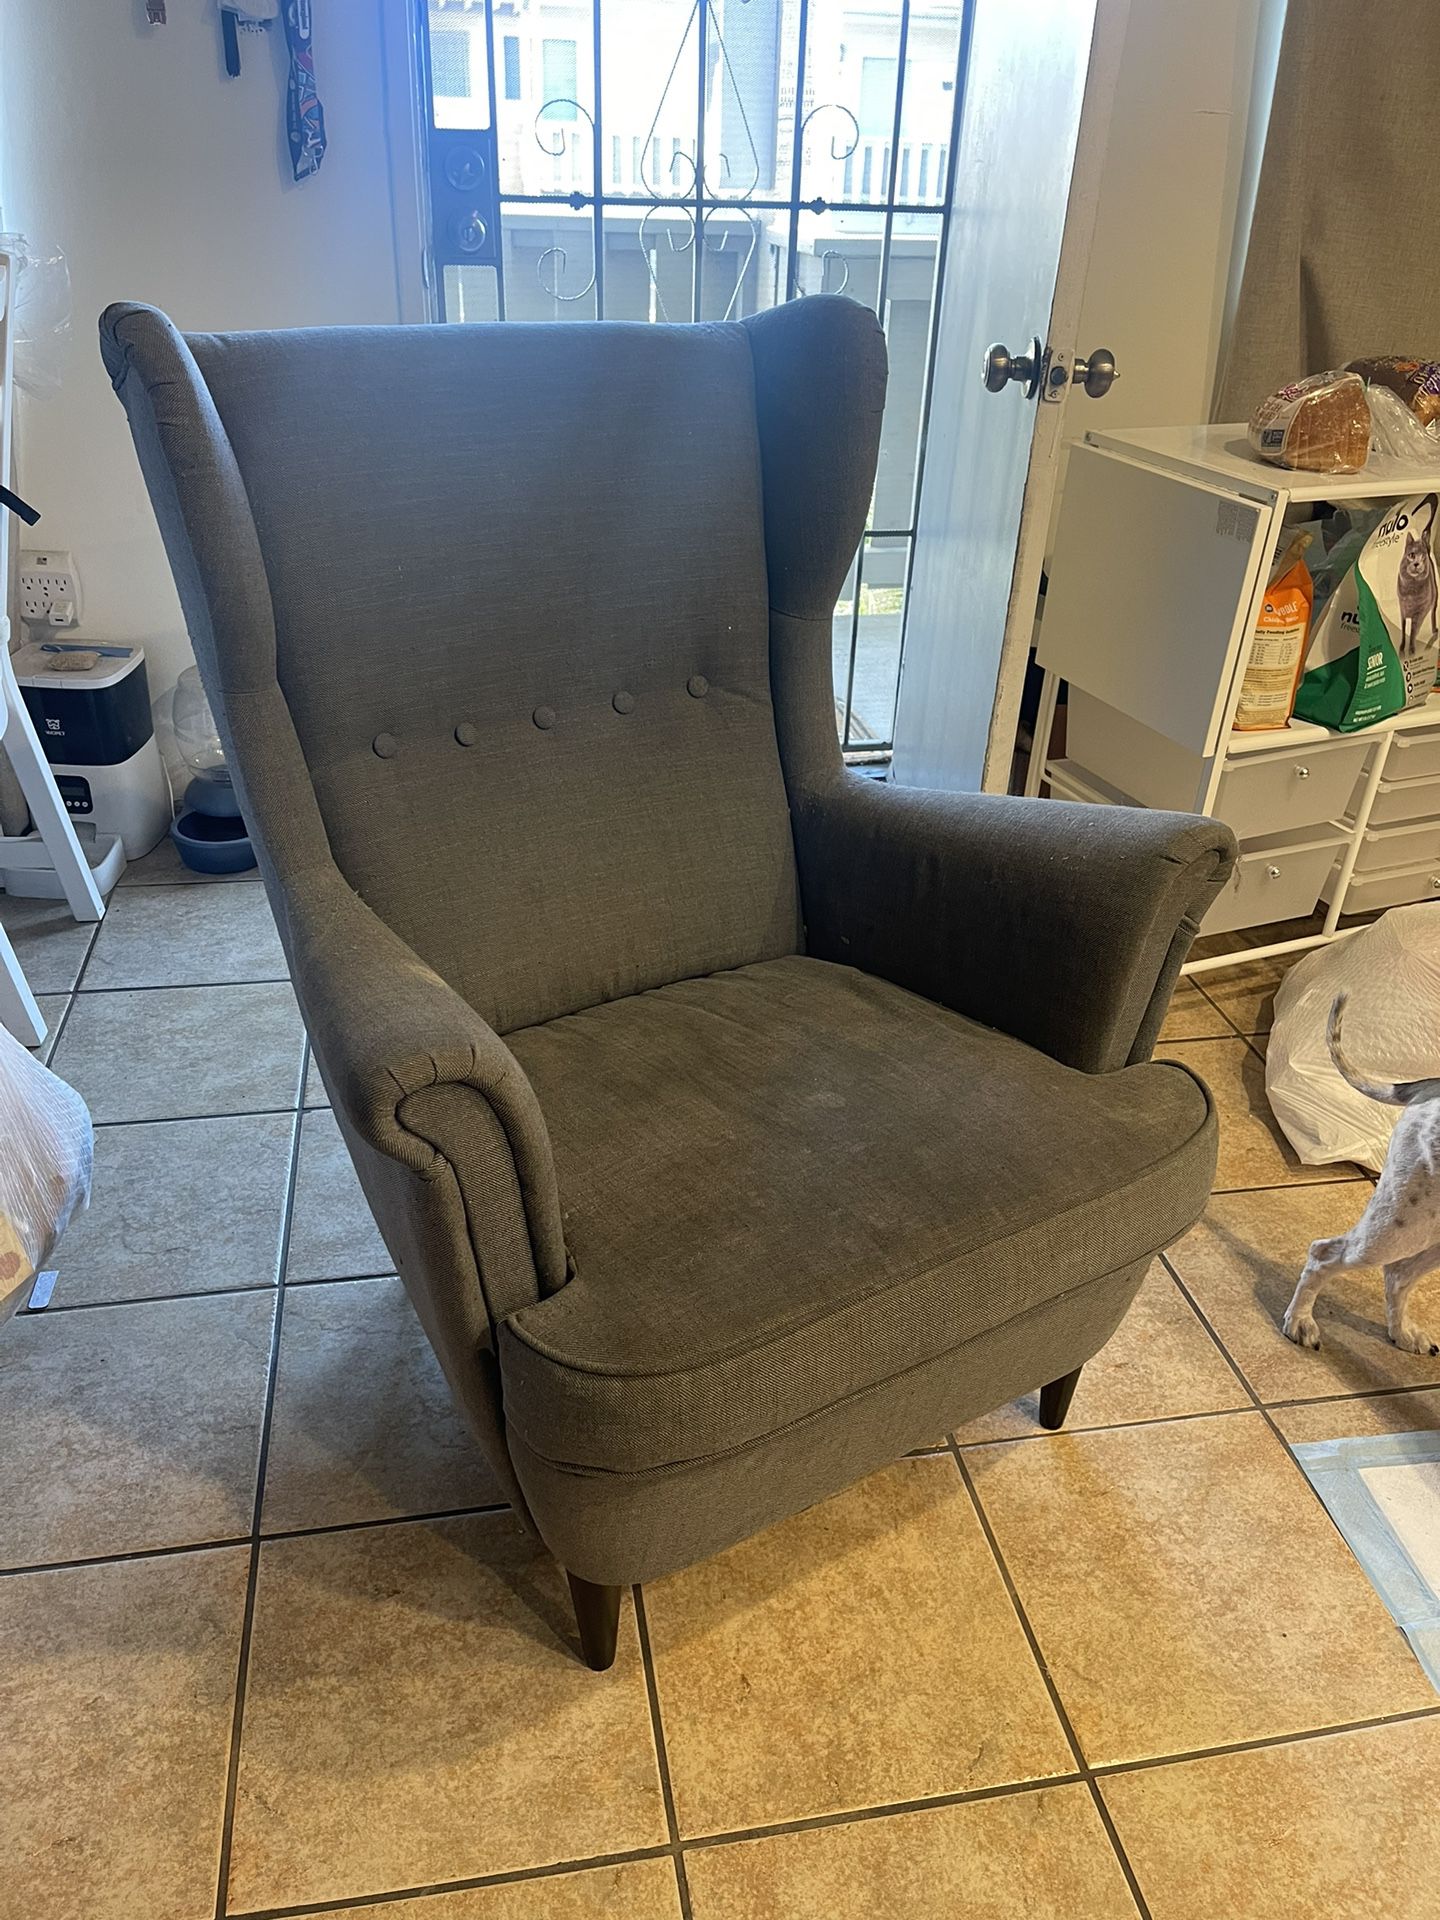 Free IKEA Strandmon chair W/ Ottoman